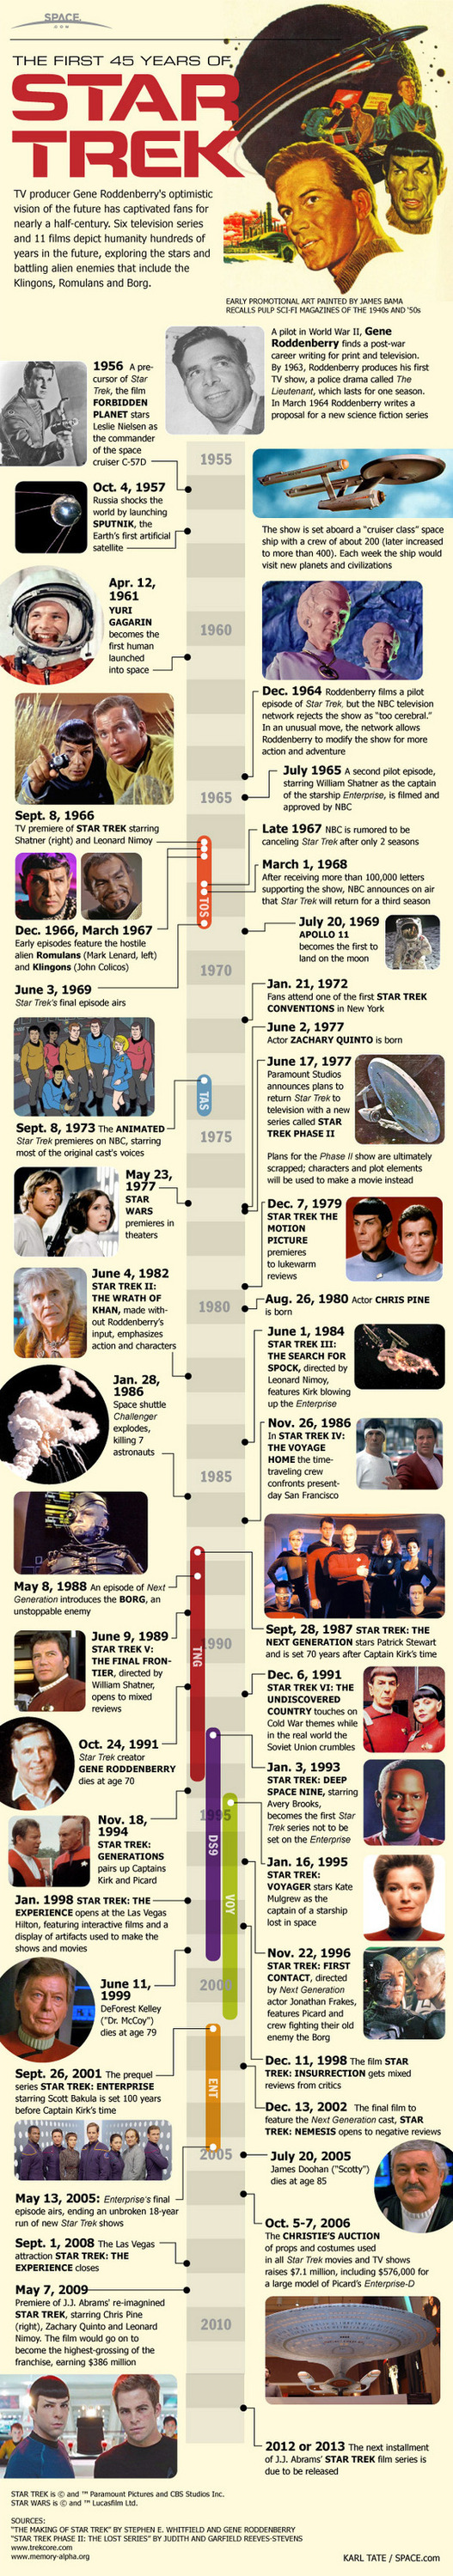 Star Trek - 45 ans en 1 image